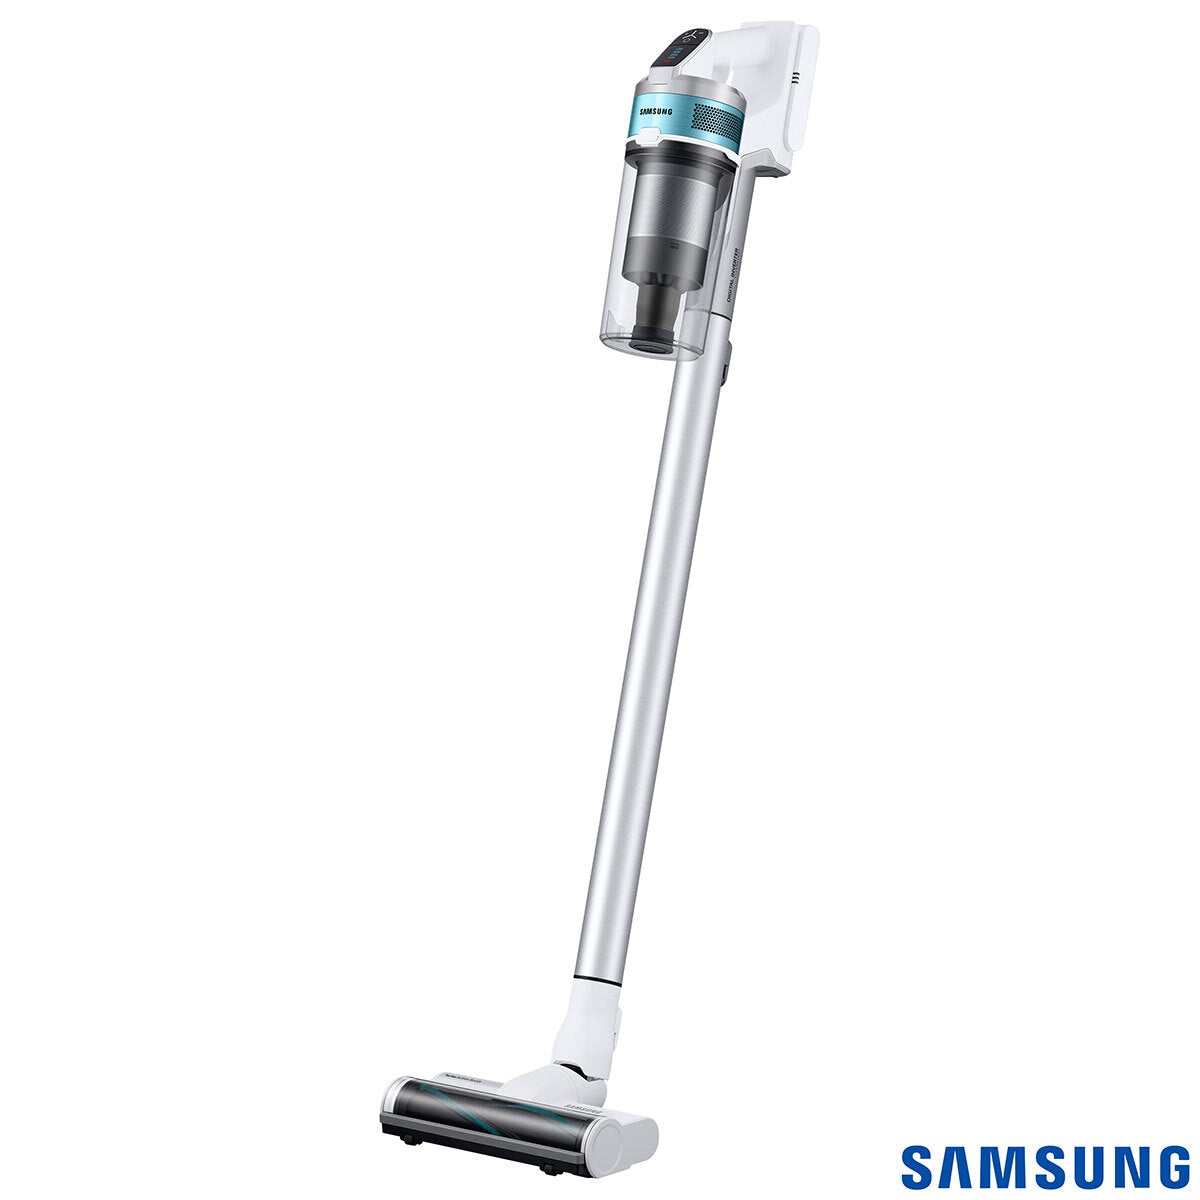 Samsung Jet 70 Pet Vacuum Cleaner VS15T7032R1/EU